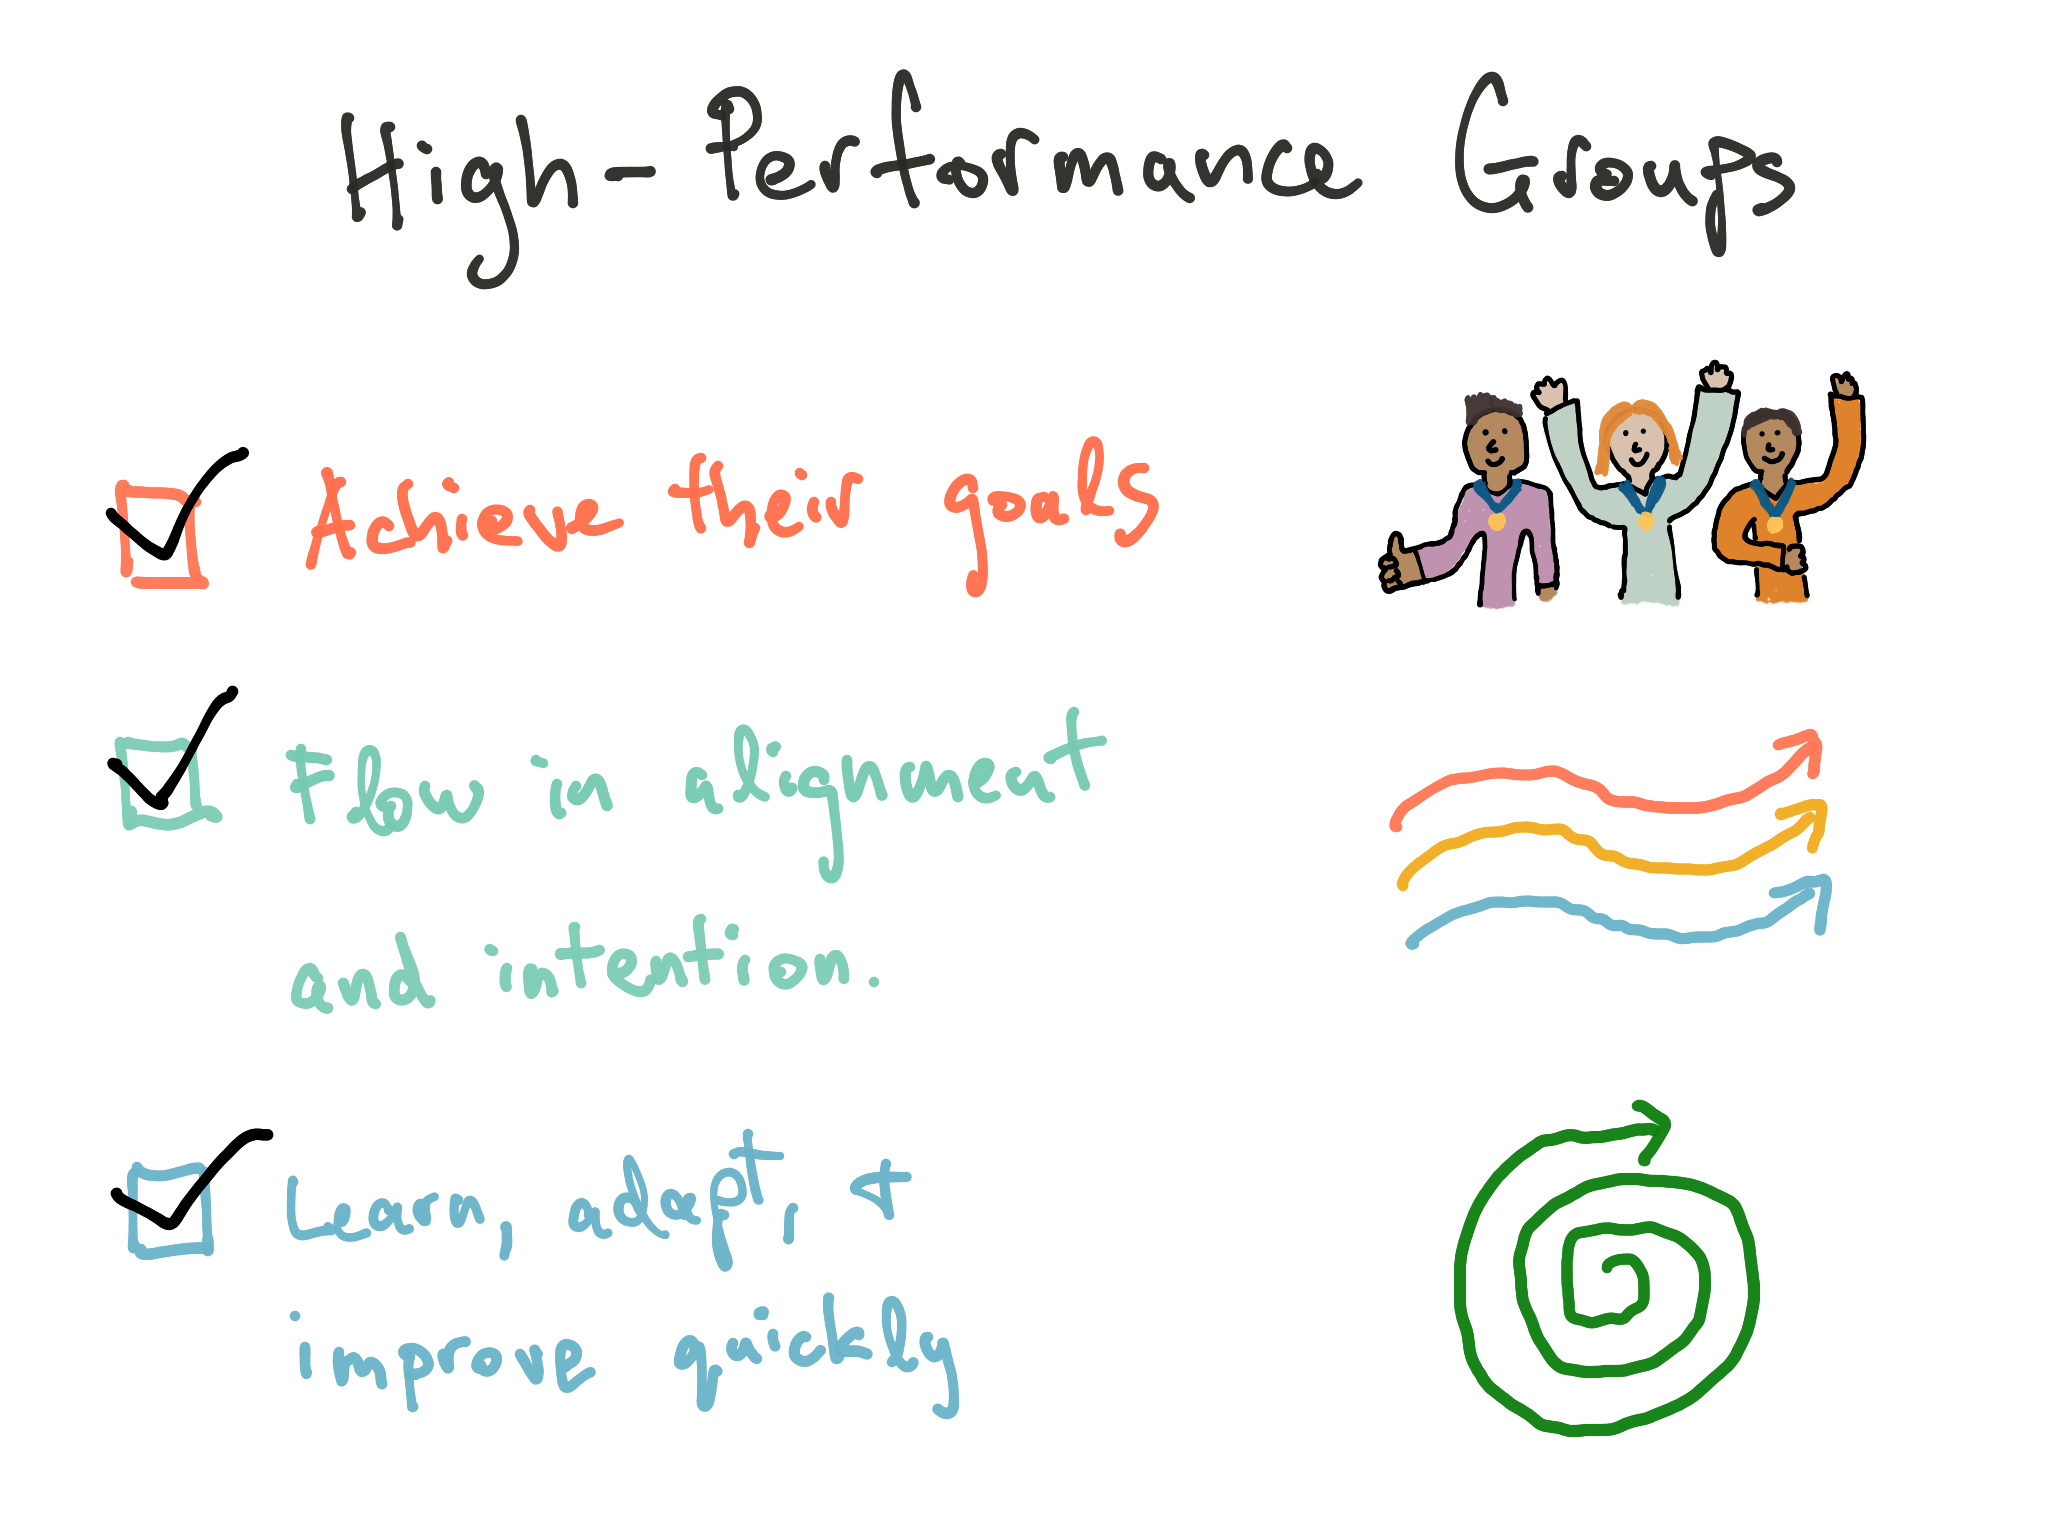 Framework: High-Performance Groups